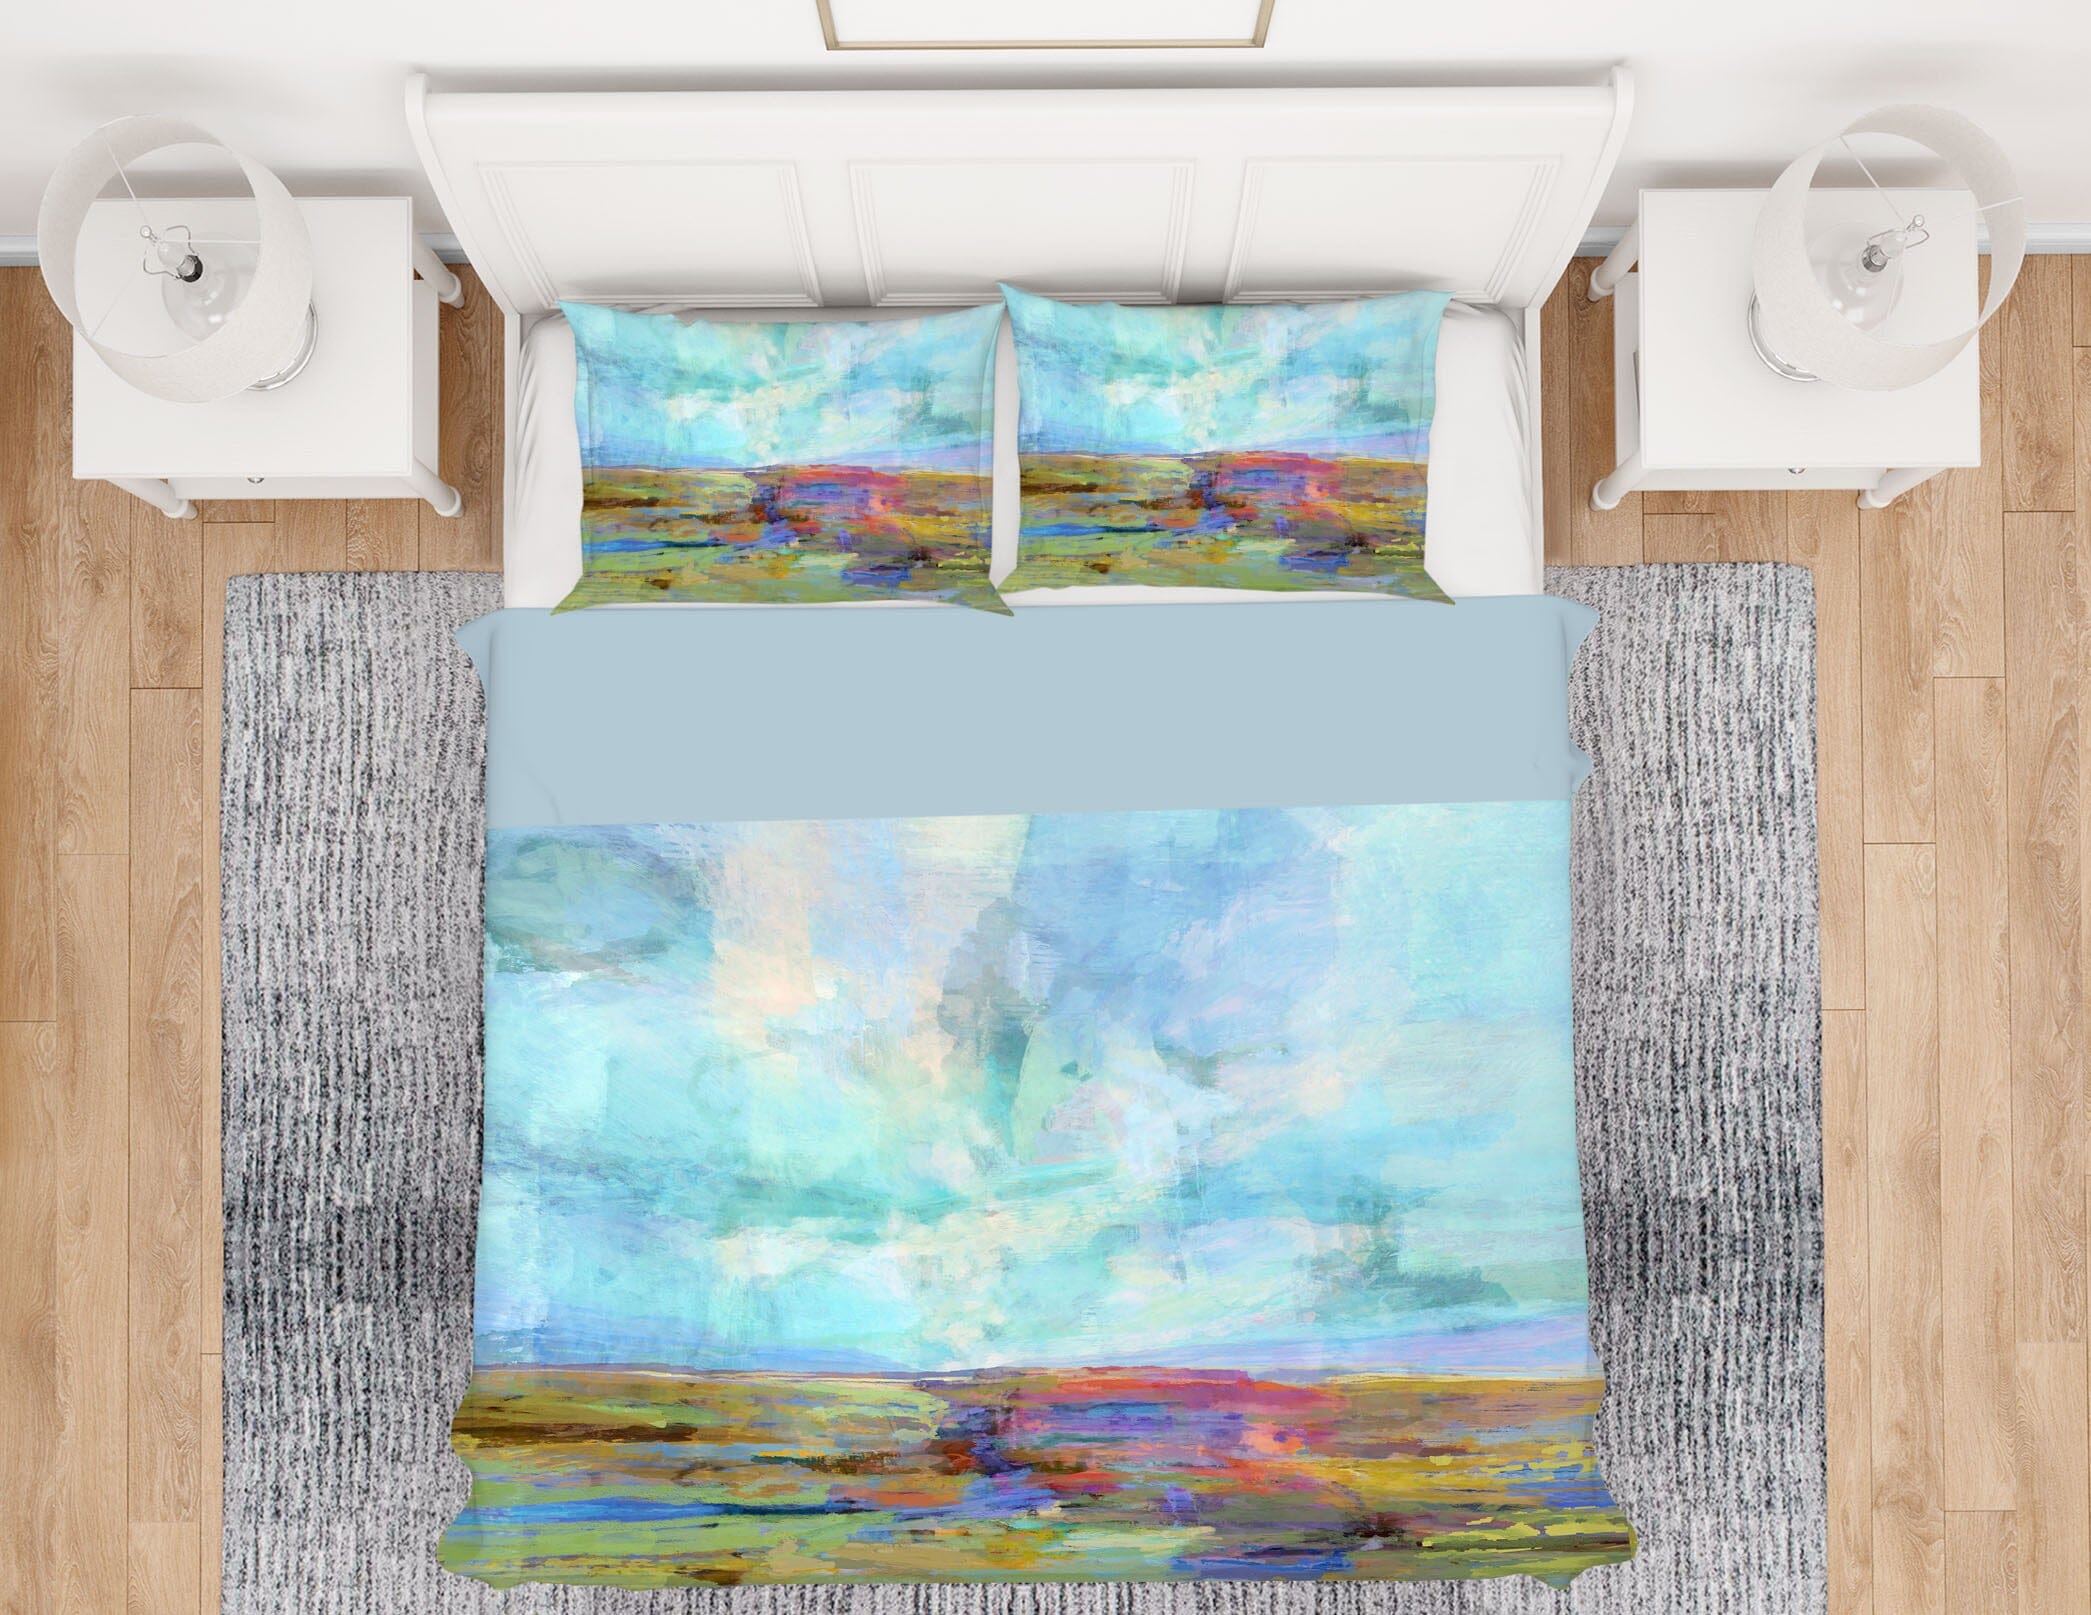 3D Prairie 2117 Michael Tienhaara Bedding Bed Pillowcases Quilt Quiet Covers AJ Creativity Home 